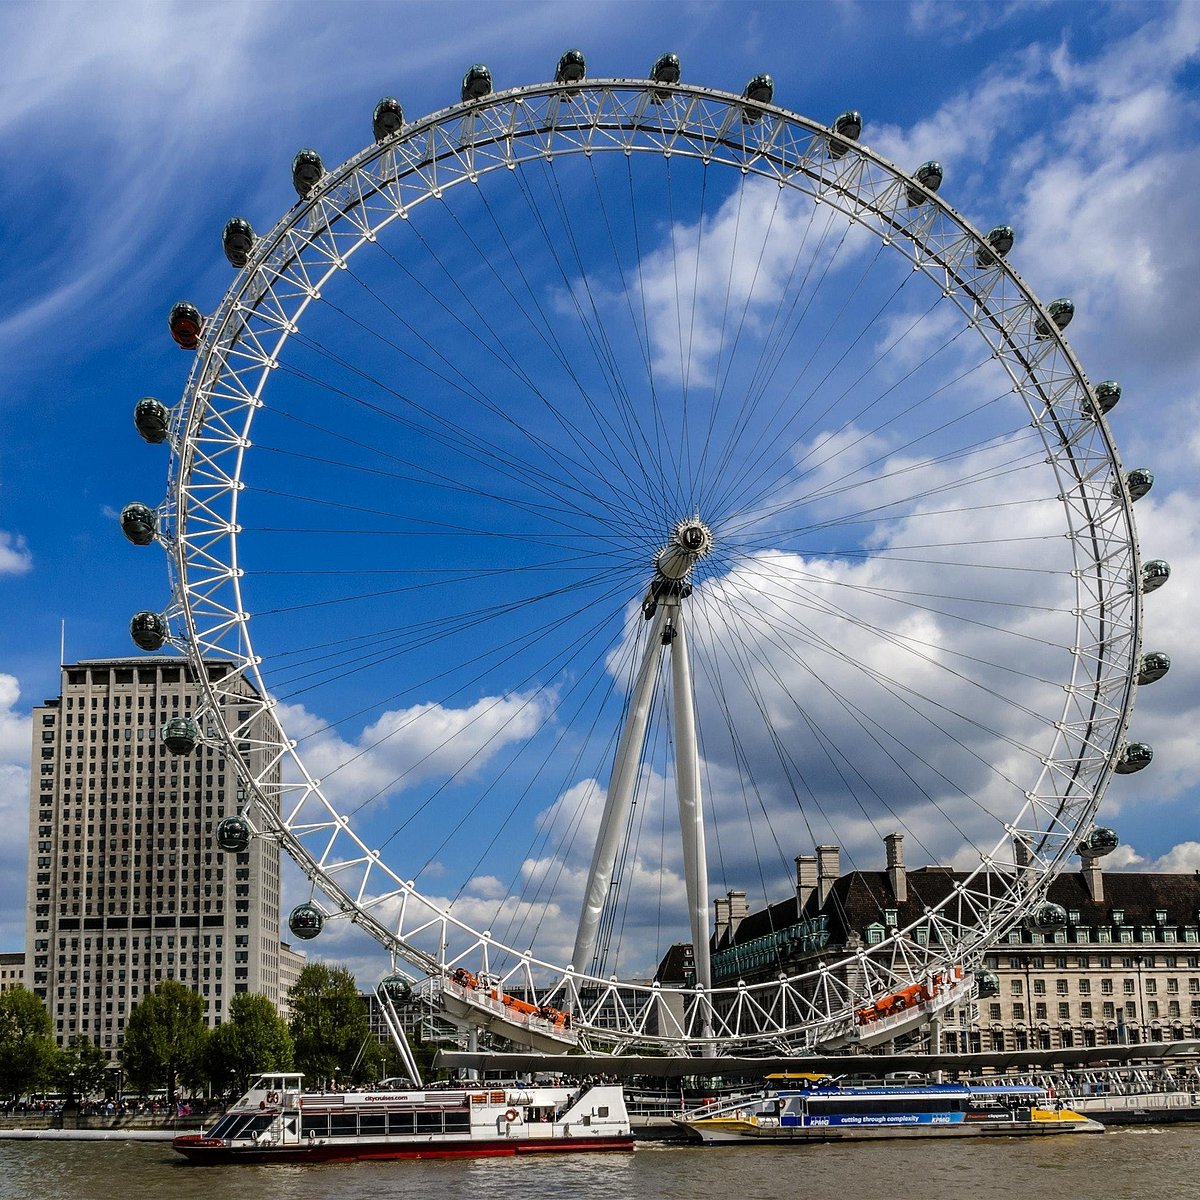 One of the london s. Лондон колесо обозрения глаз Лондона. Лондонский глаз London Eye. Колесо обозрения "Лондонский глаз" (London Eye). Великобритания колесо обозрения London Eye.